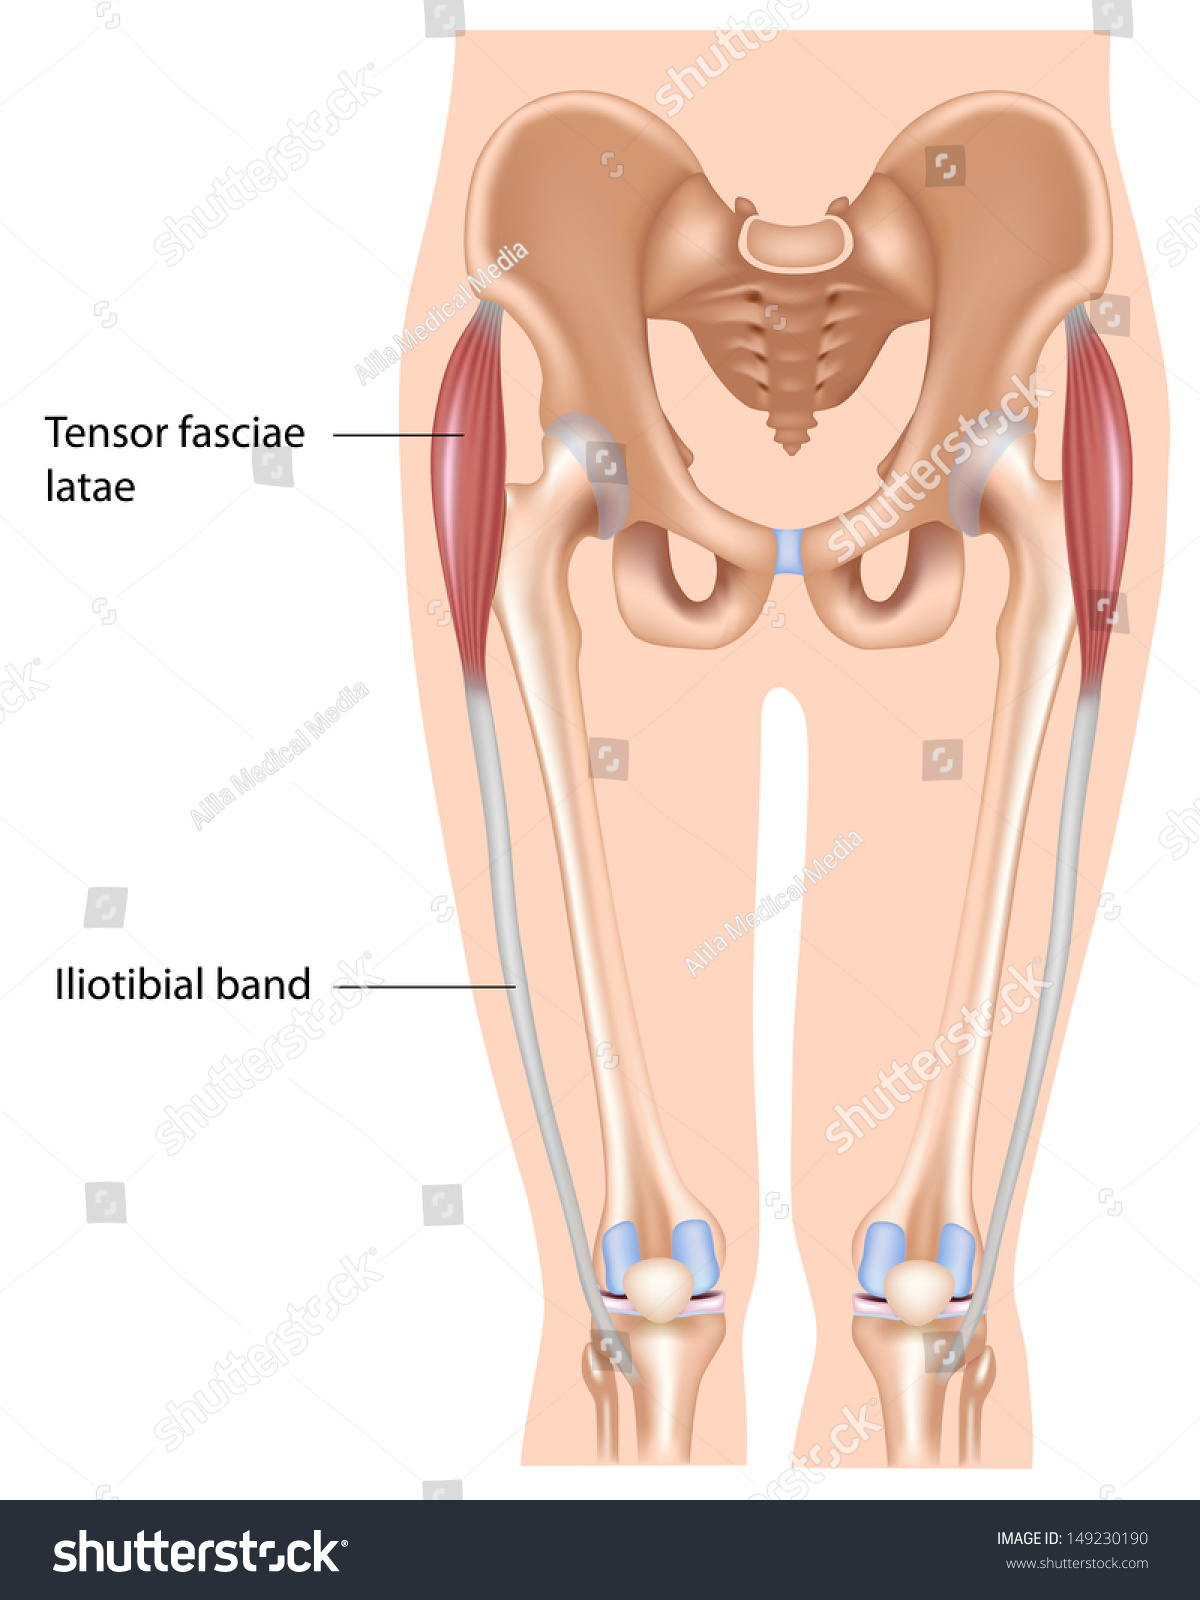 Tensor Fasciae Latae Muscle Stock Illustration 149230190 - Shutterstock